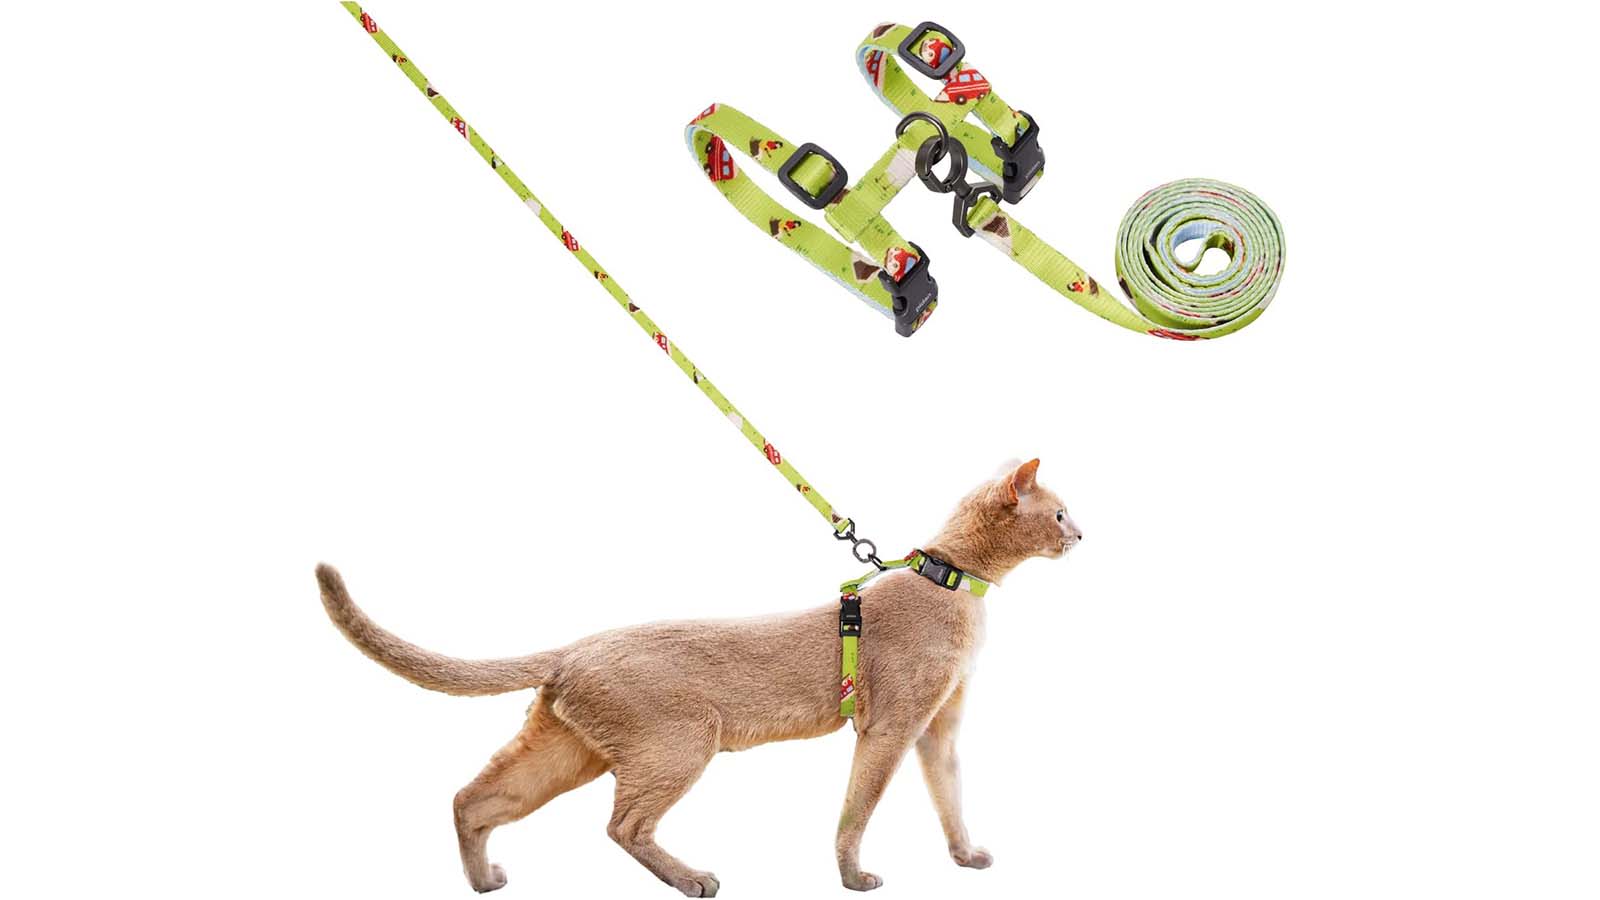 https://media.cnn.com/api/v1/images/stellar/prod/underscored-pettravel-pidan-cat-harness-and-leash.jpg?q=h_900,w_1600,x_0,y_0